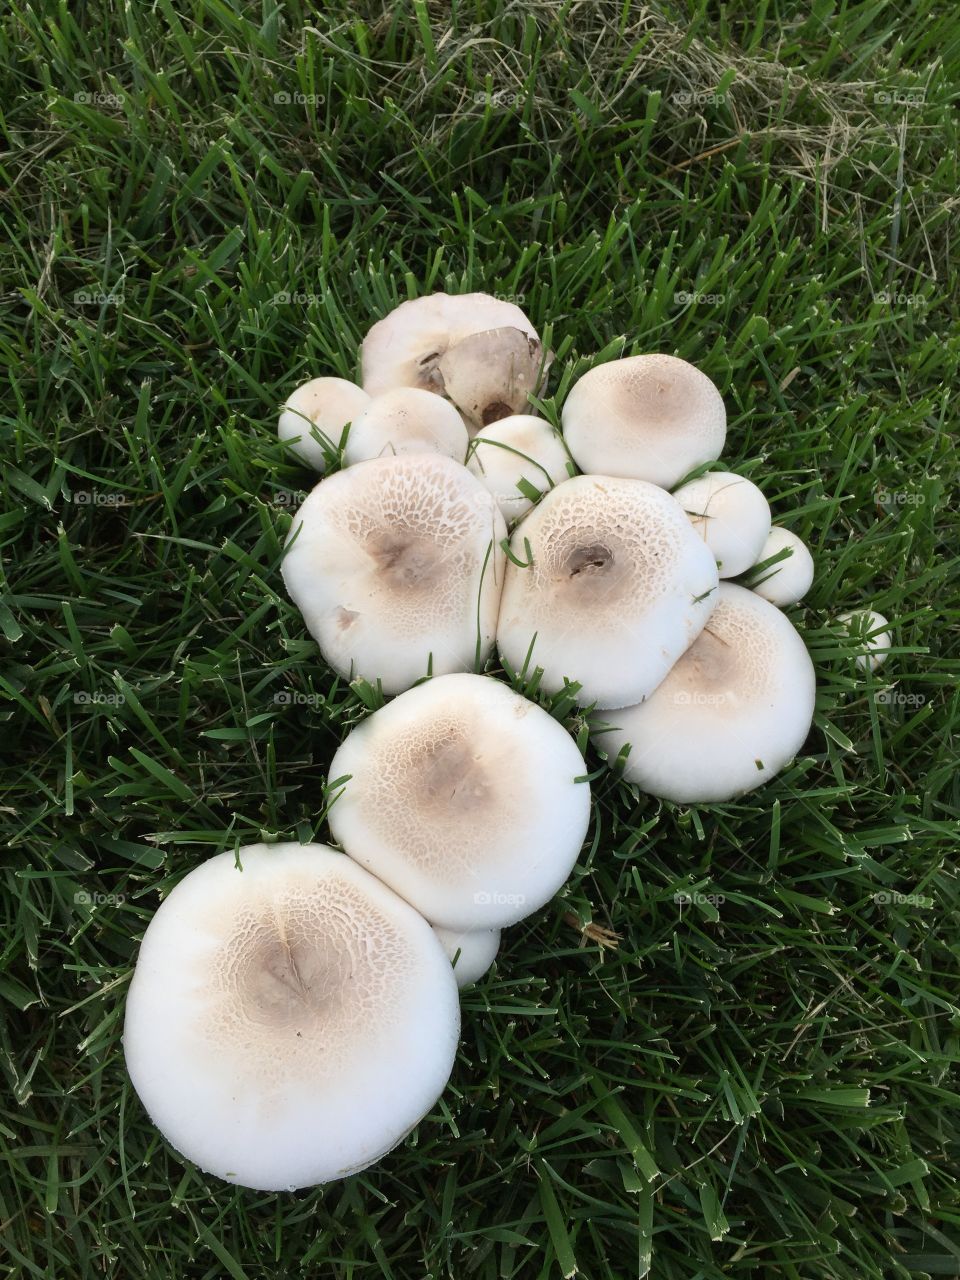 Round mushrooms